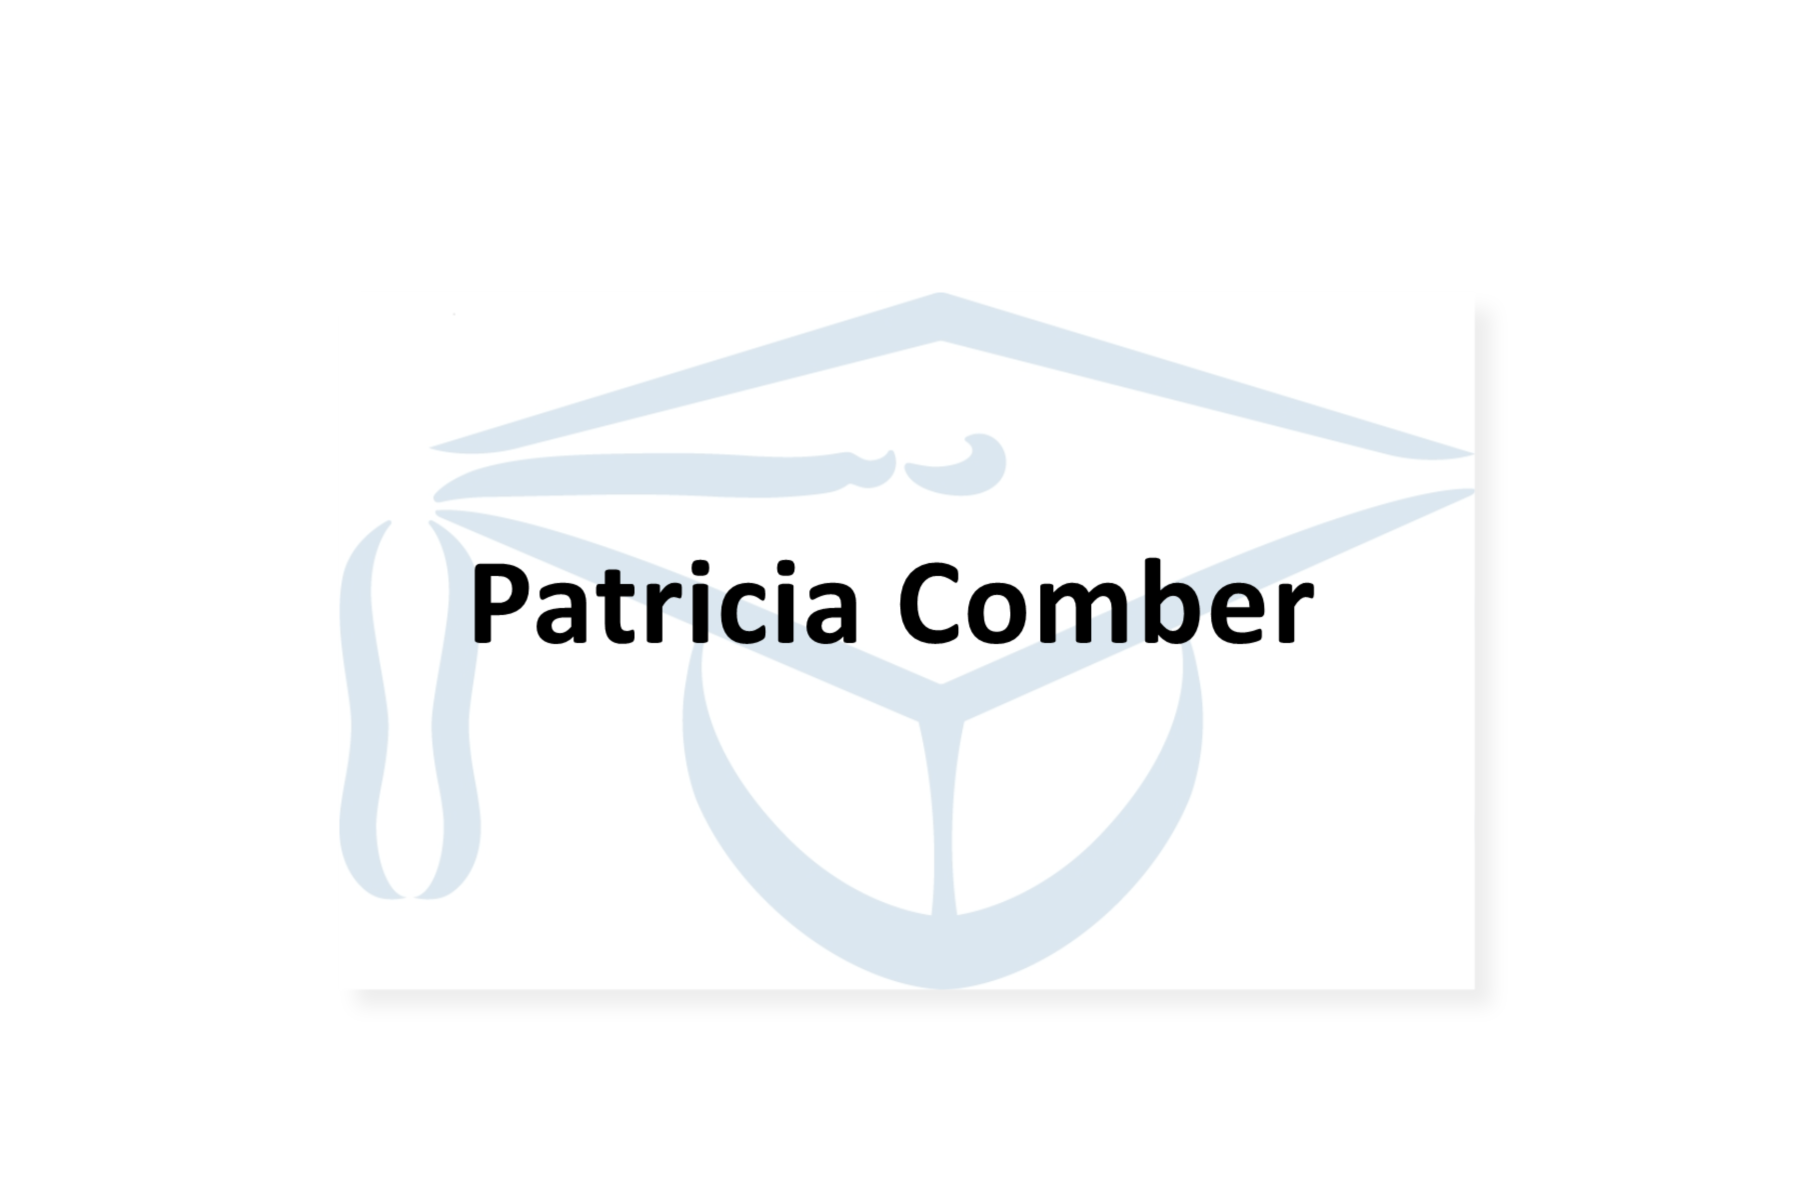 Patricia Comber